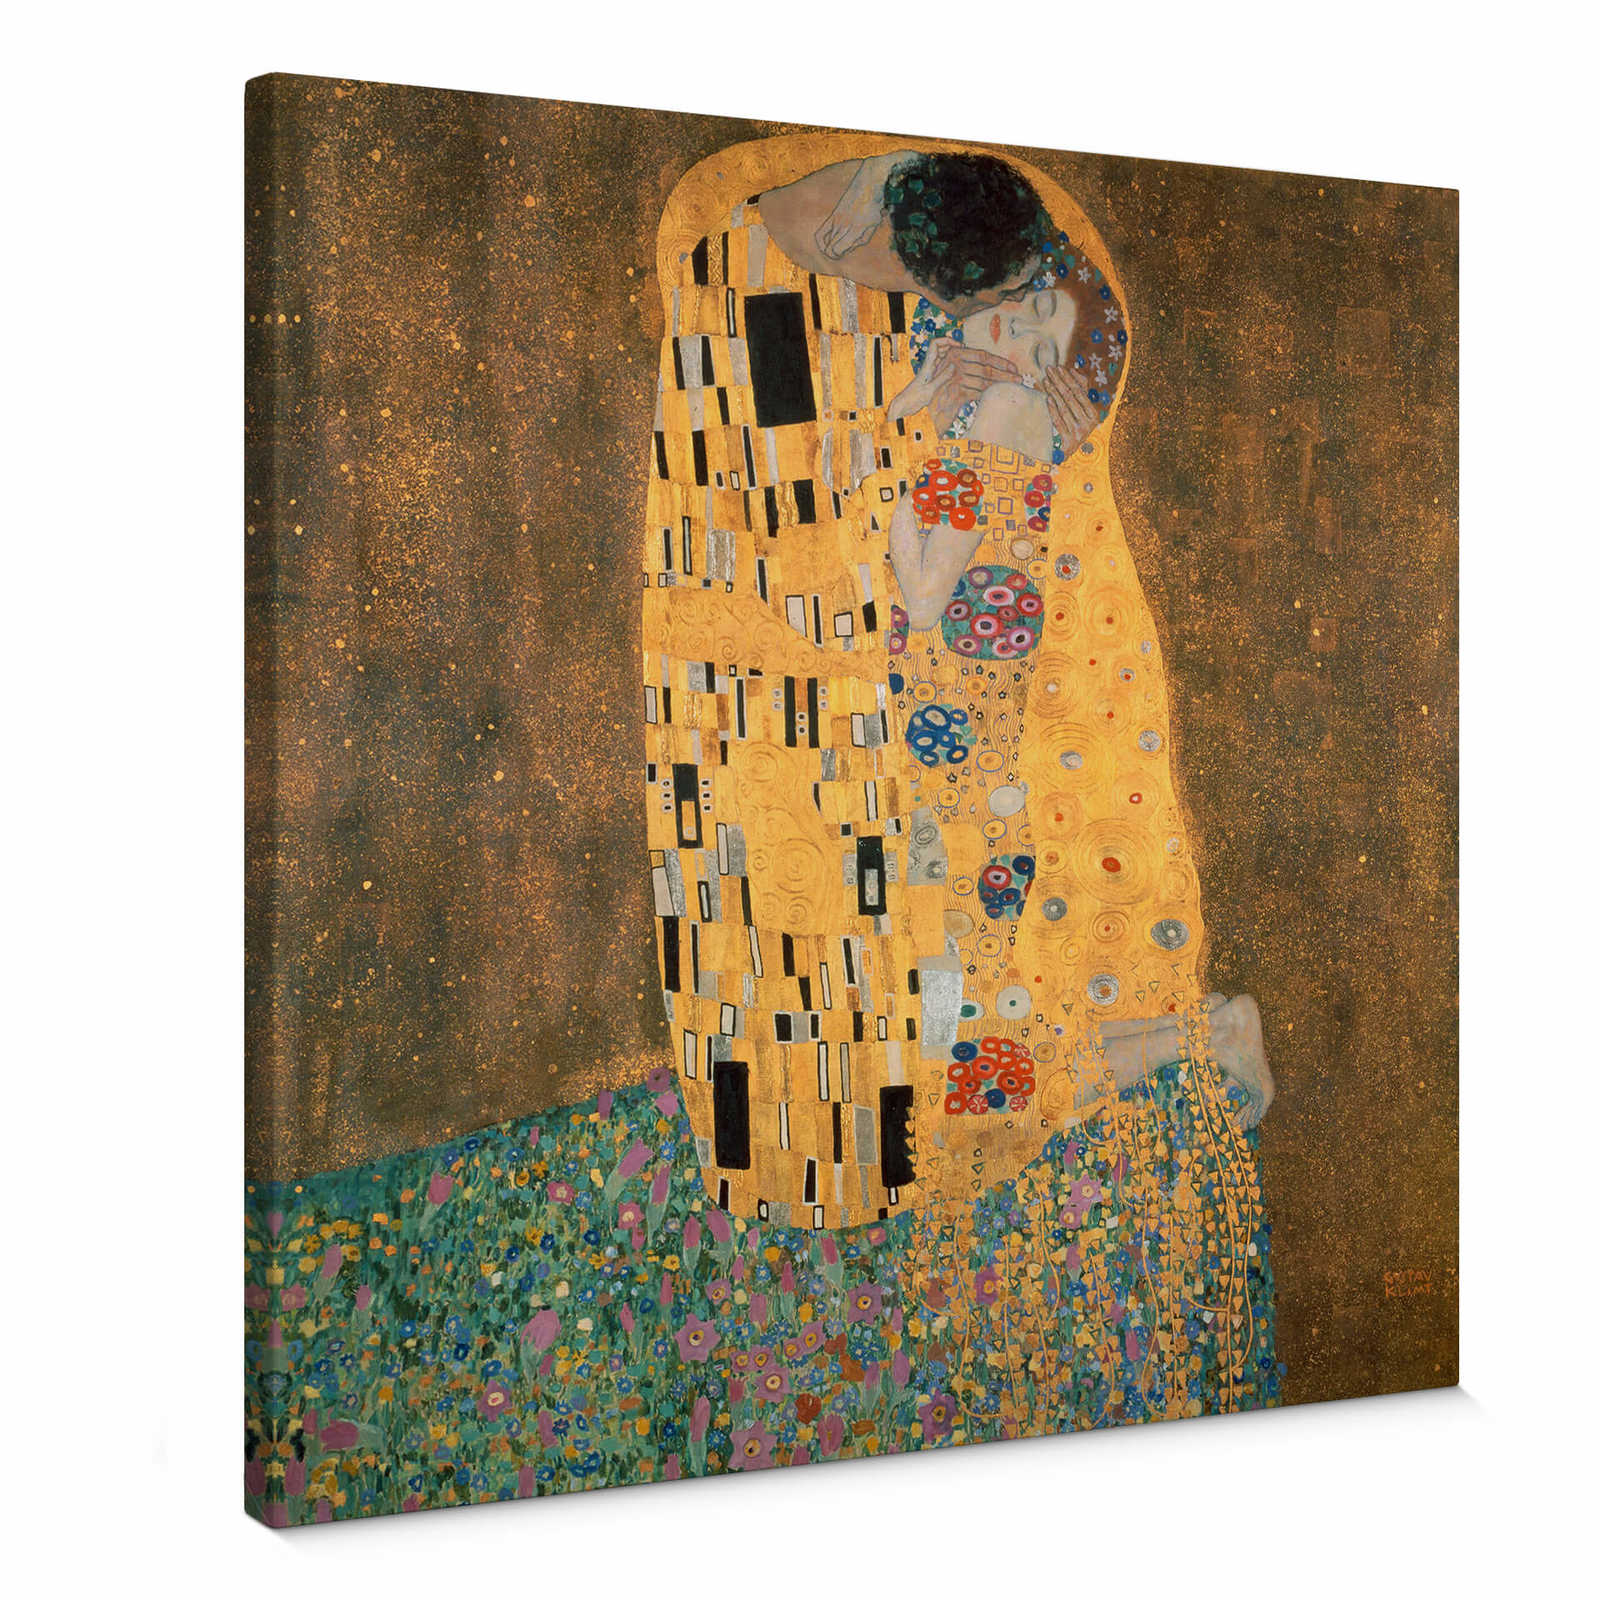         Canvas print "The kiss" by Gustav Klimt
    